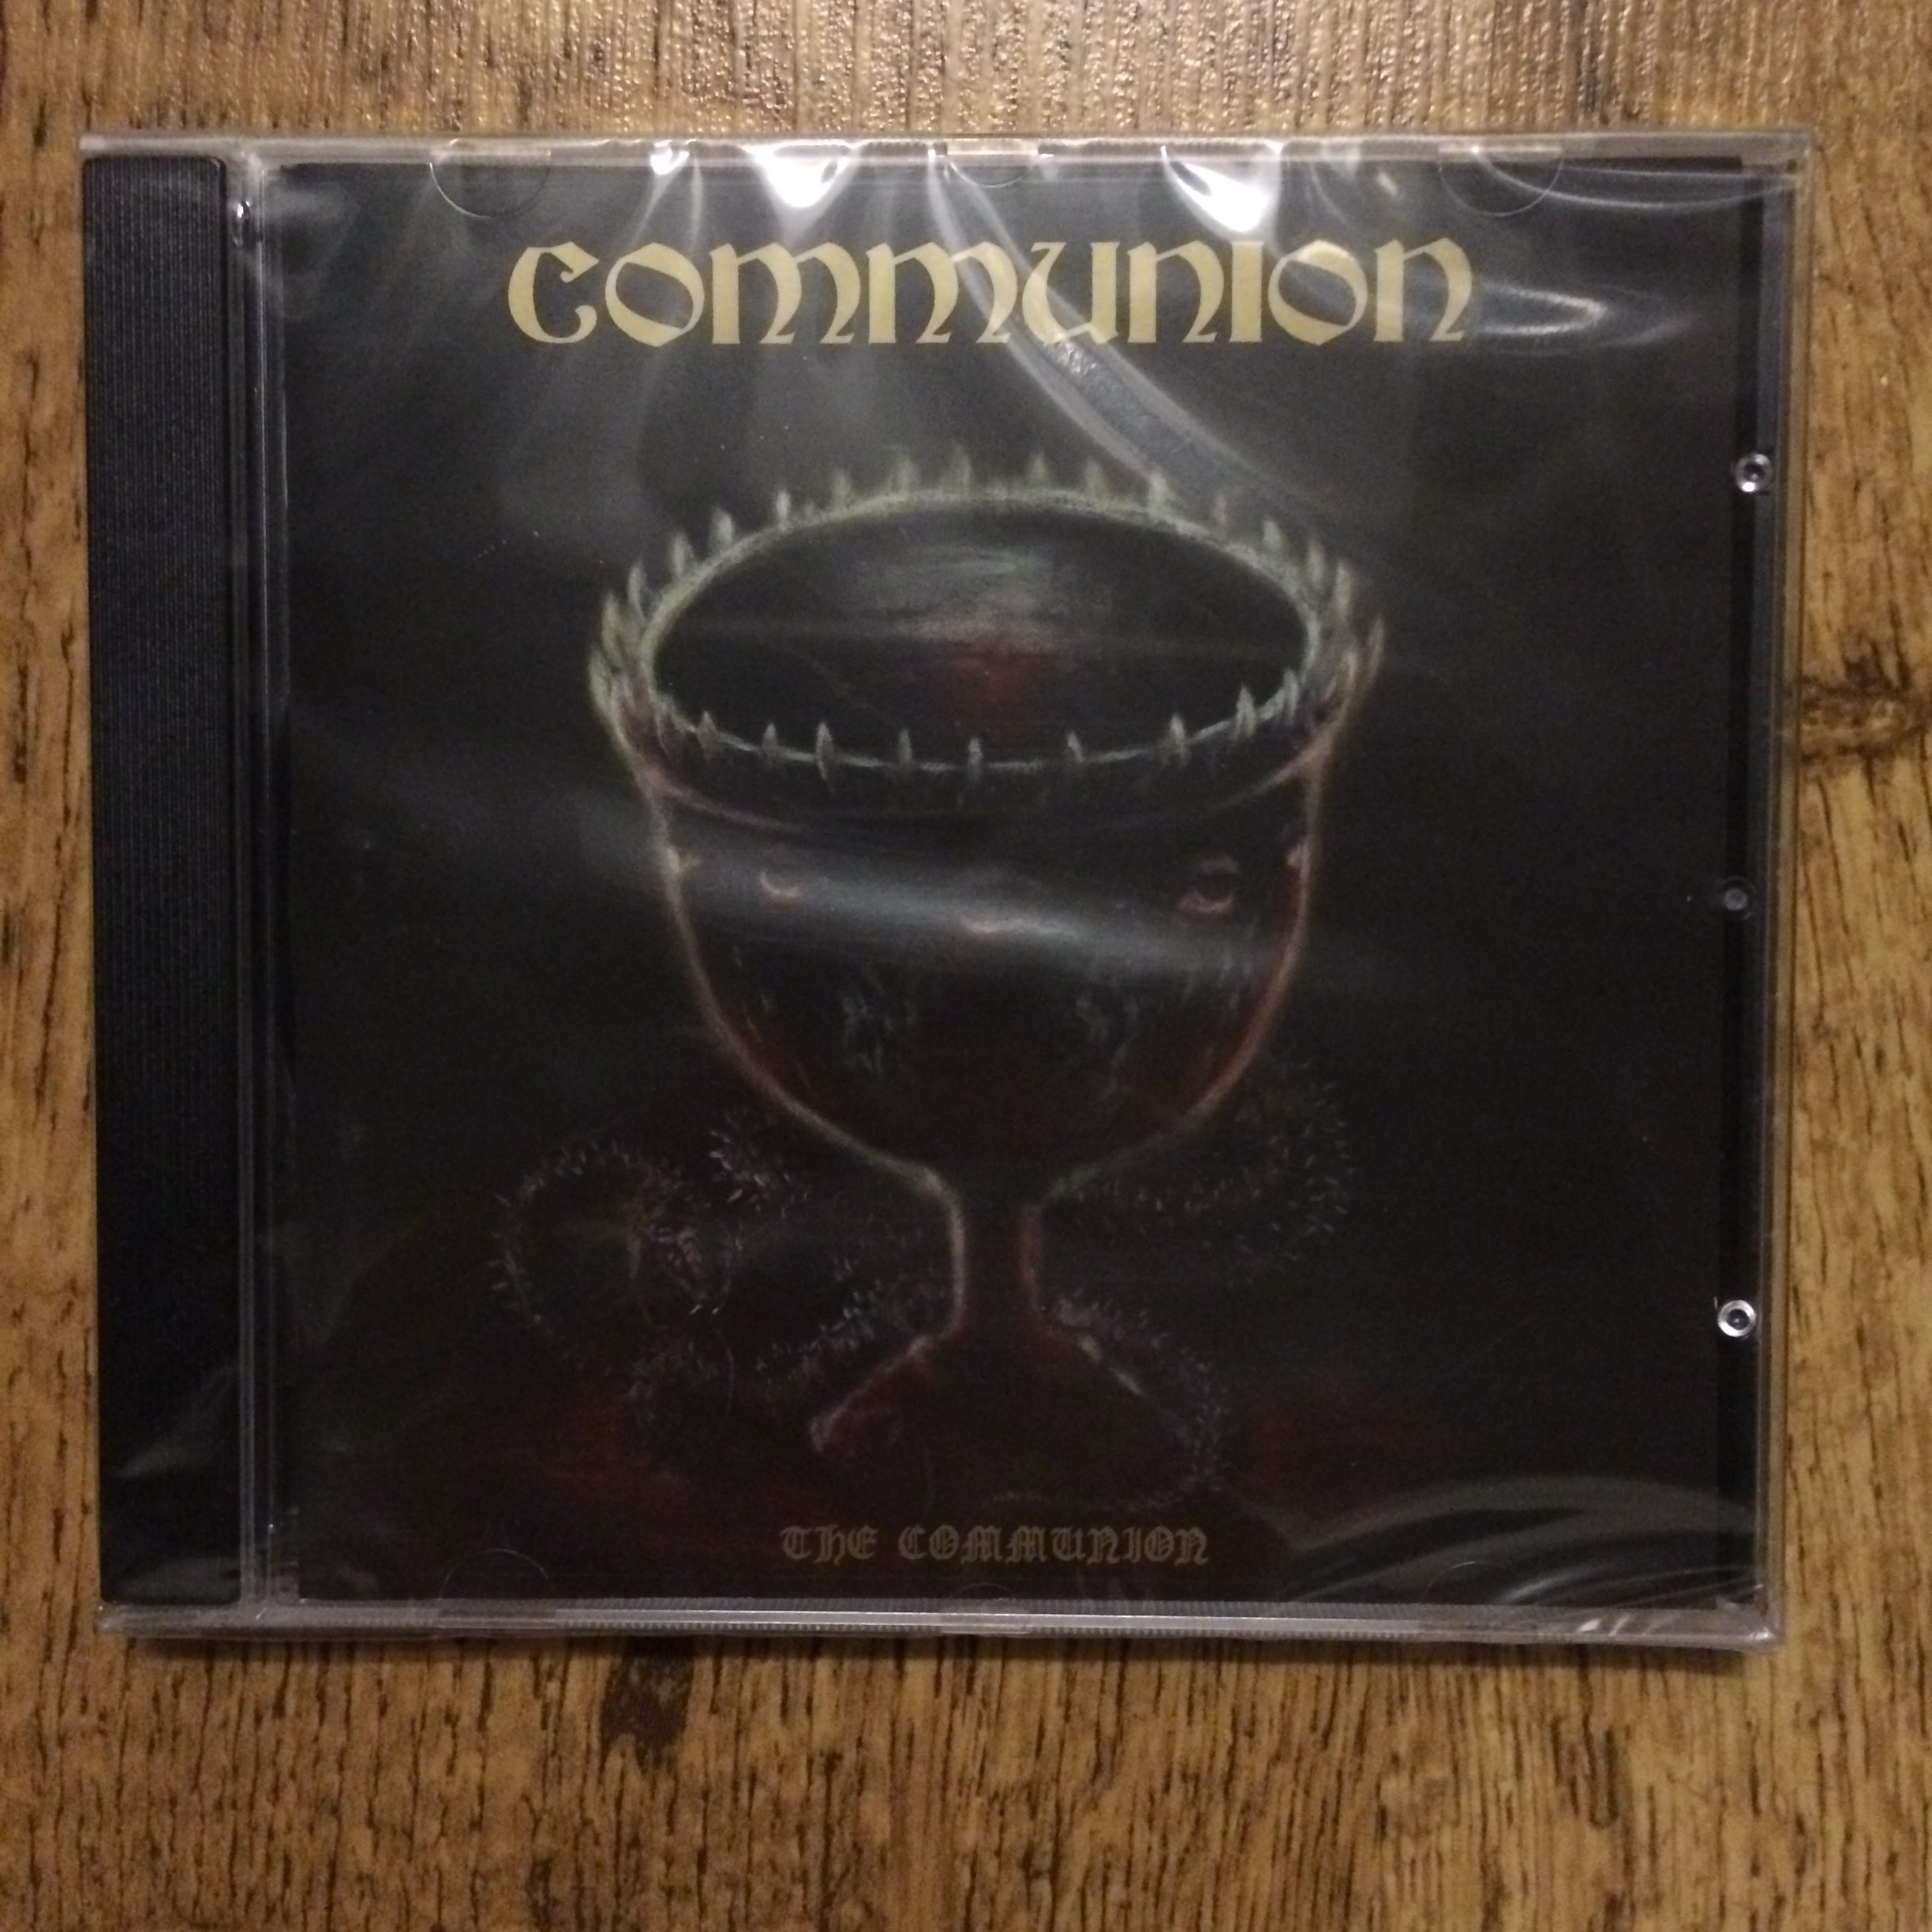 Photo of the Communion - "The Communion" CD